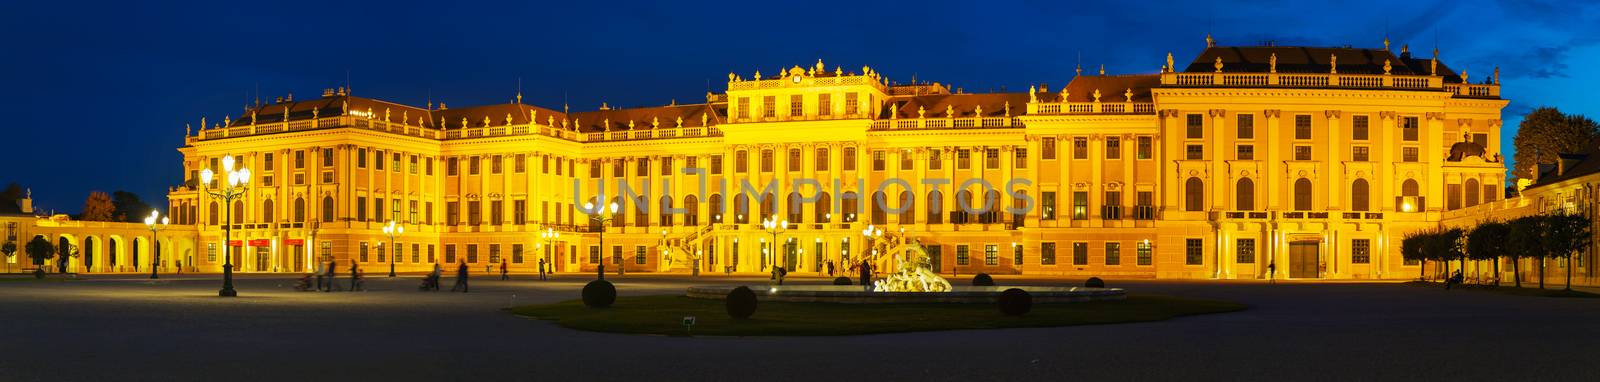 Schonbrunn palace in Vienna, Austria at night time